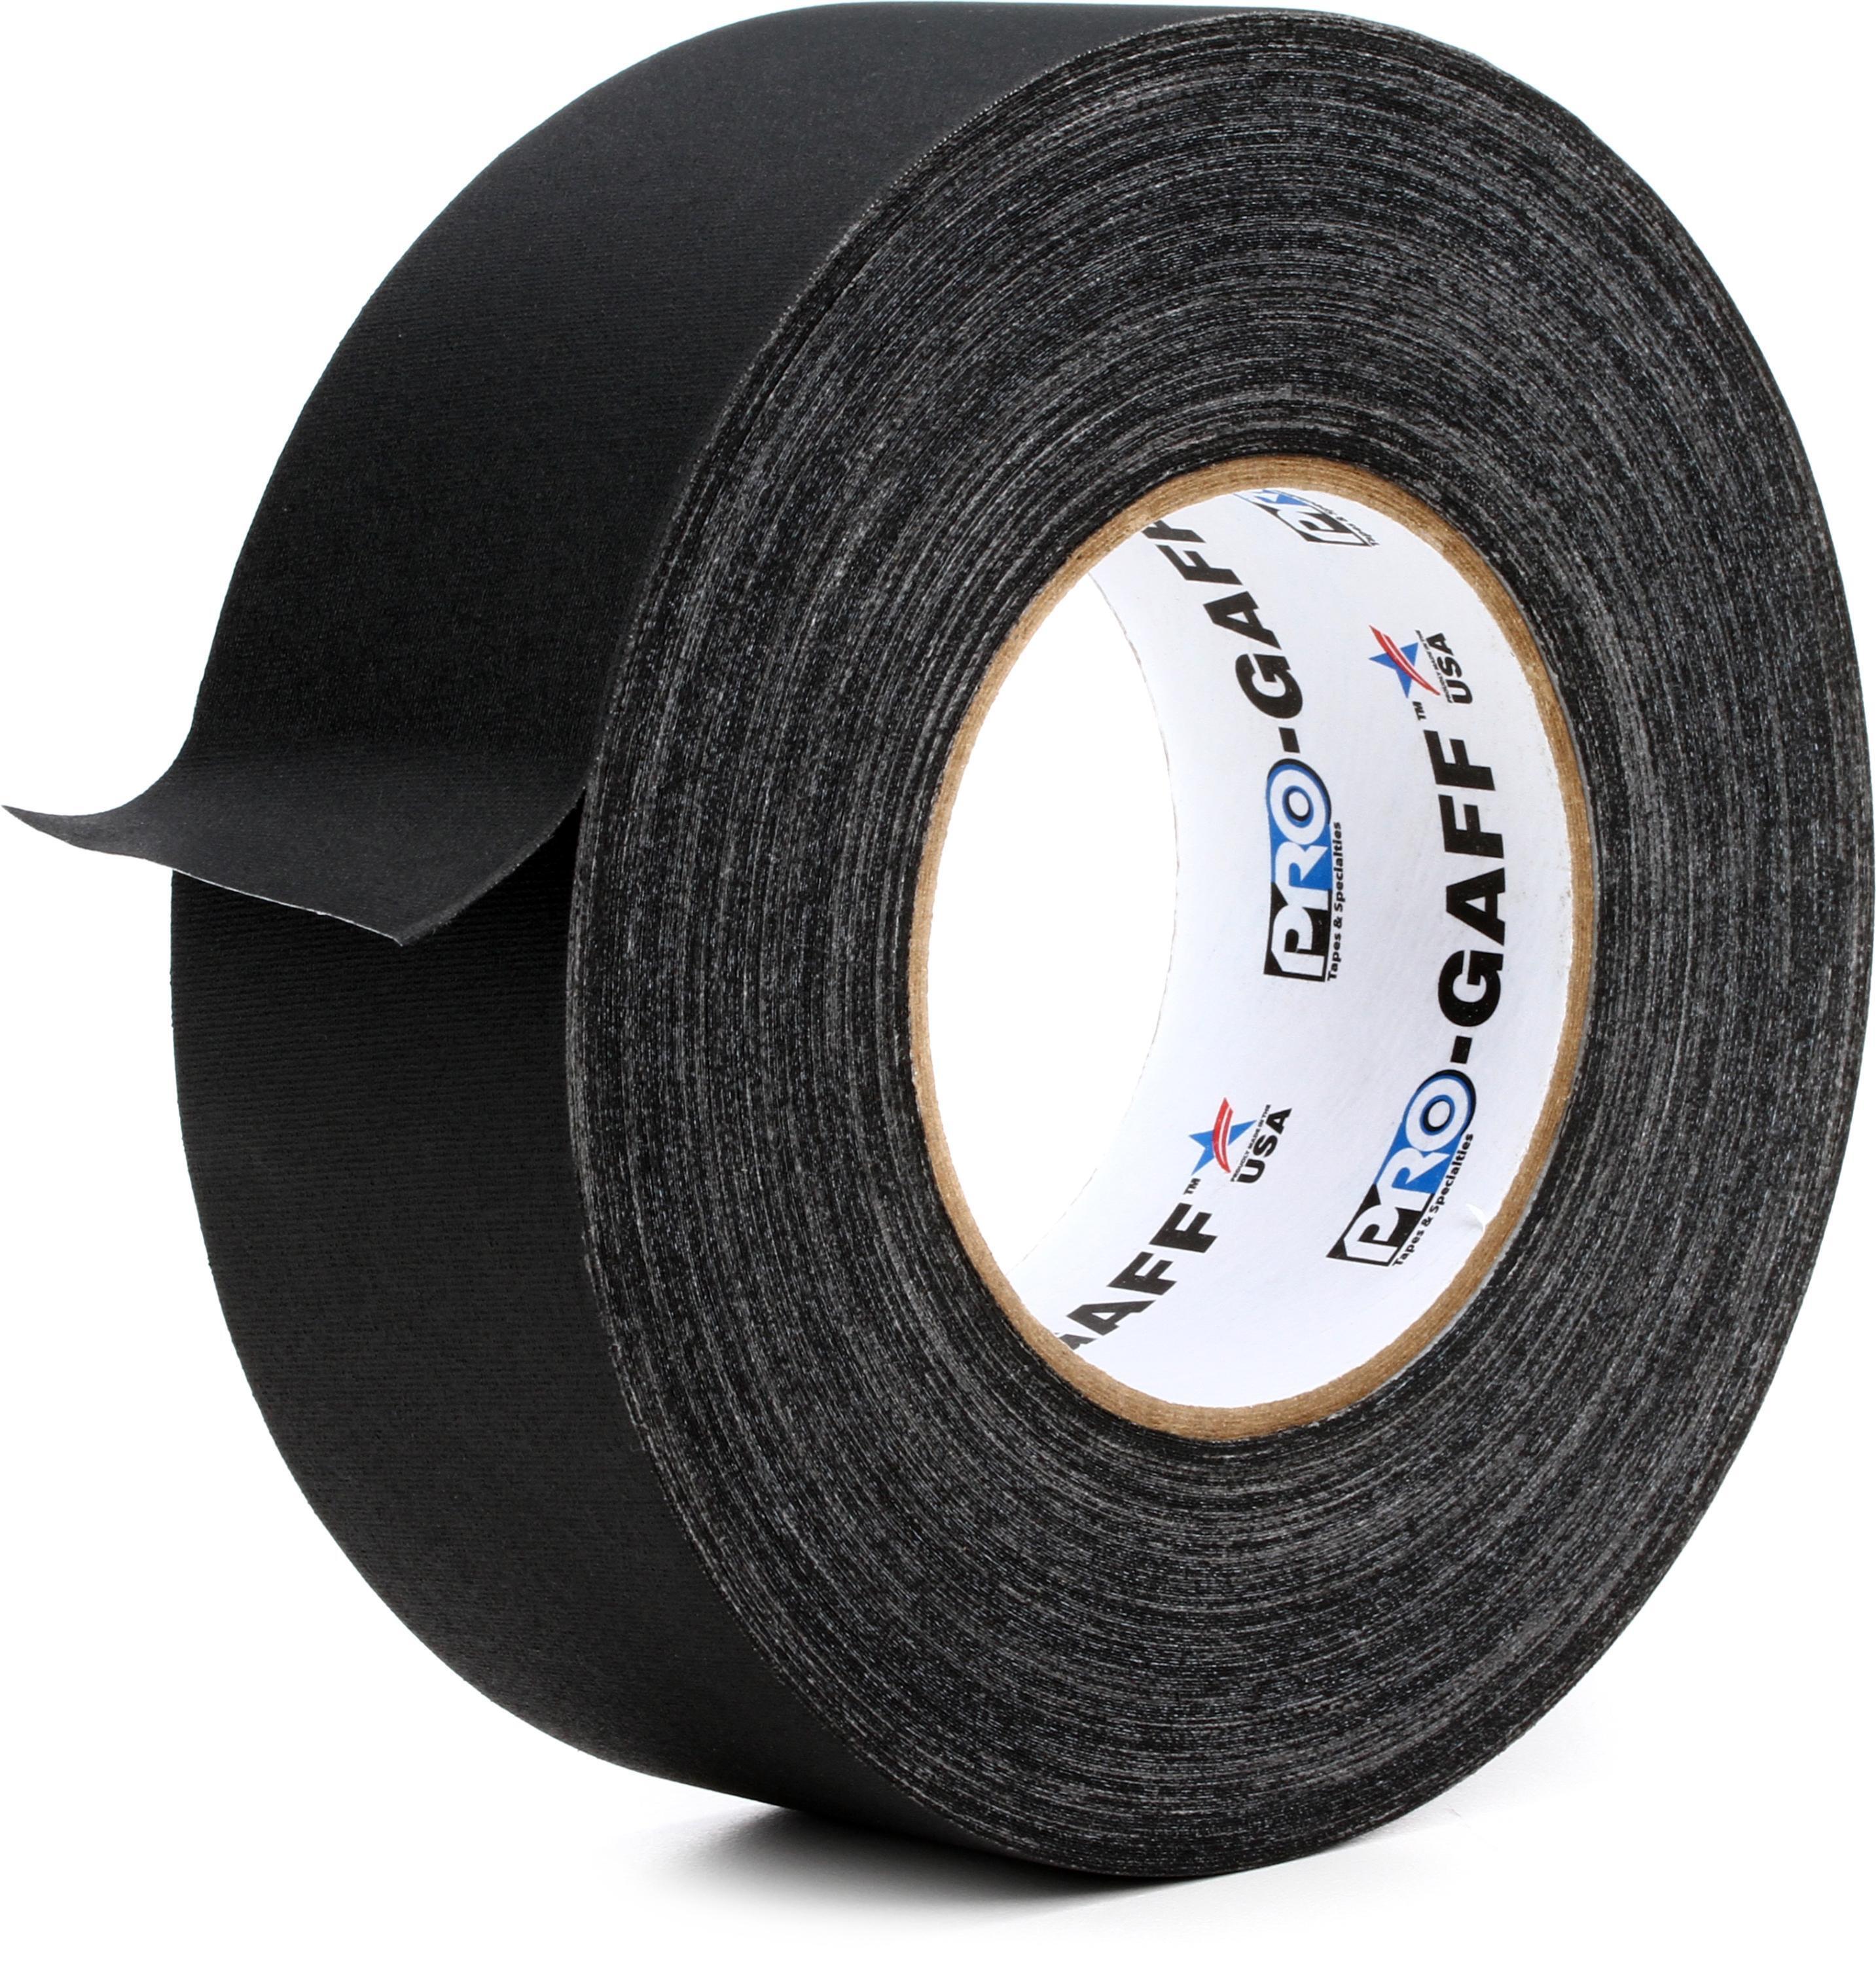 Pro Tapes Pro Gaff Premium 2-inch Gaffers Tape - 50-yard Roll - Black